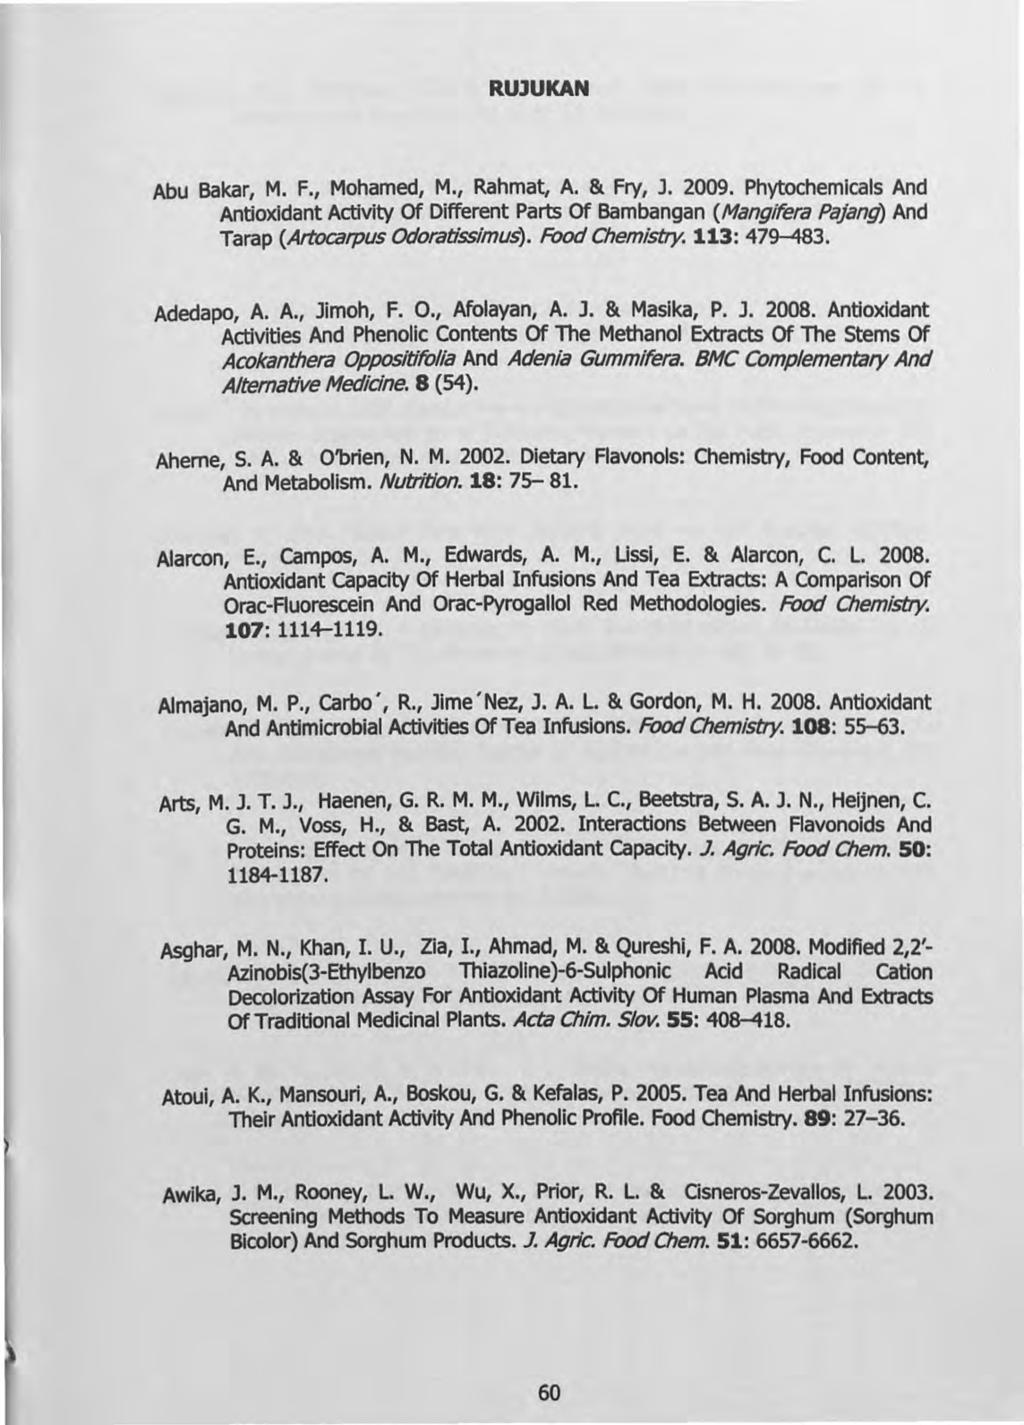 RUlUKAN Abu Bakar, M. F., Mohamed, M., Rahmat, A. & Fry, J. 2009. Phytochemlcals And Antioxidant Activity Of Different Parts Of Bambangan (Mangifera Pajang) And Tarap (Artocarpus Odoratissimus).